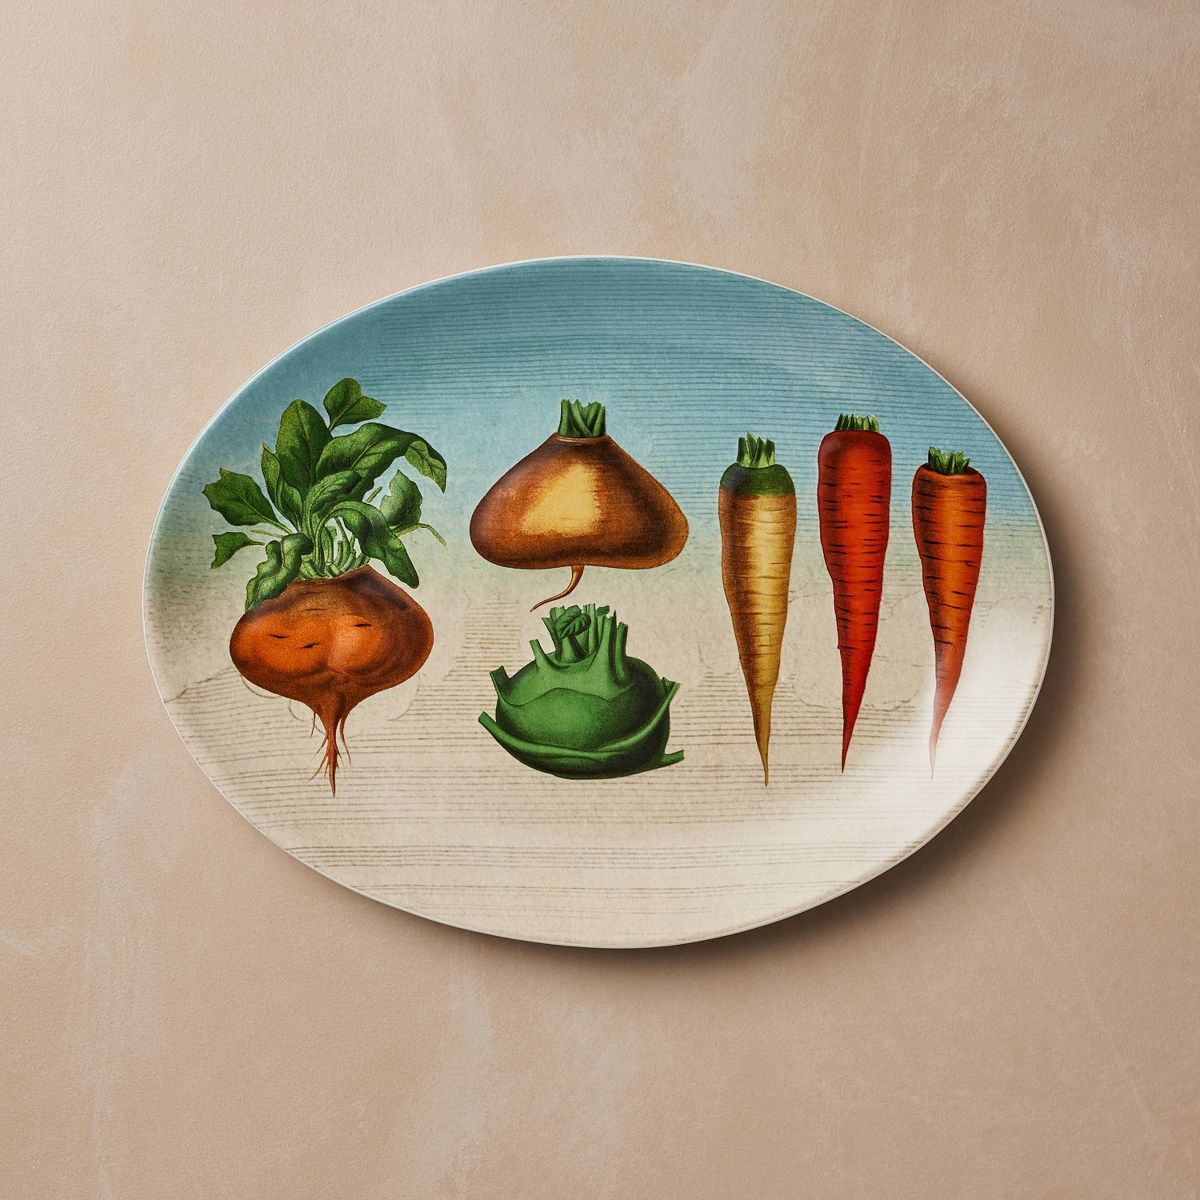 9"x12" Oval Stoneware Platter Fall Root Vegetables - John Derian for Target | Target